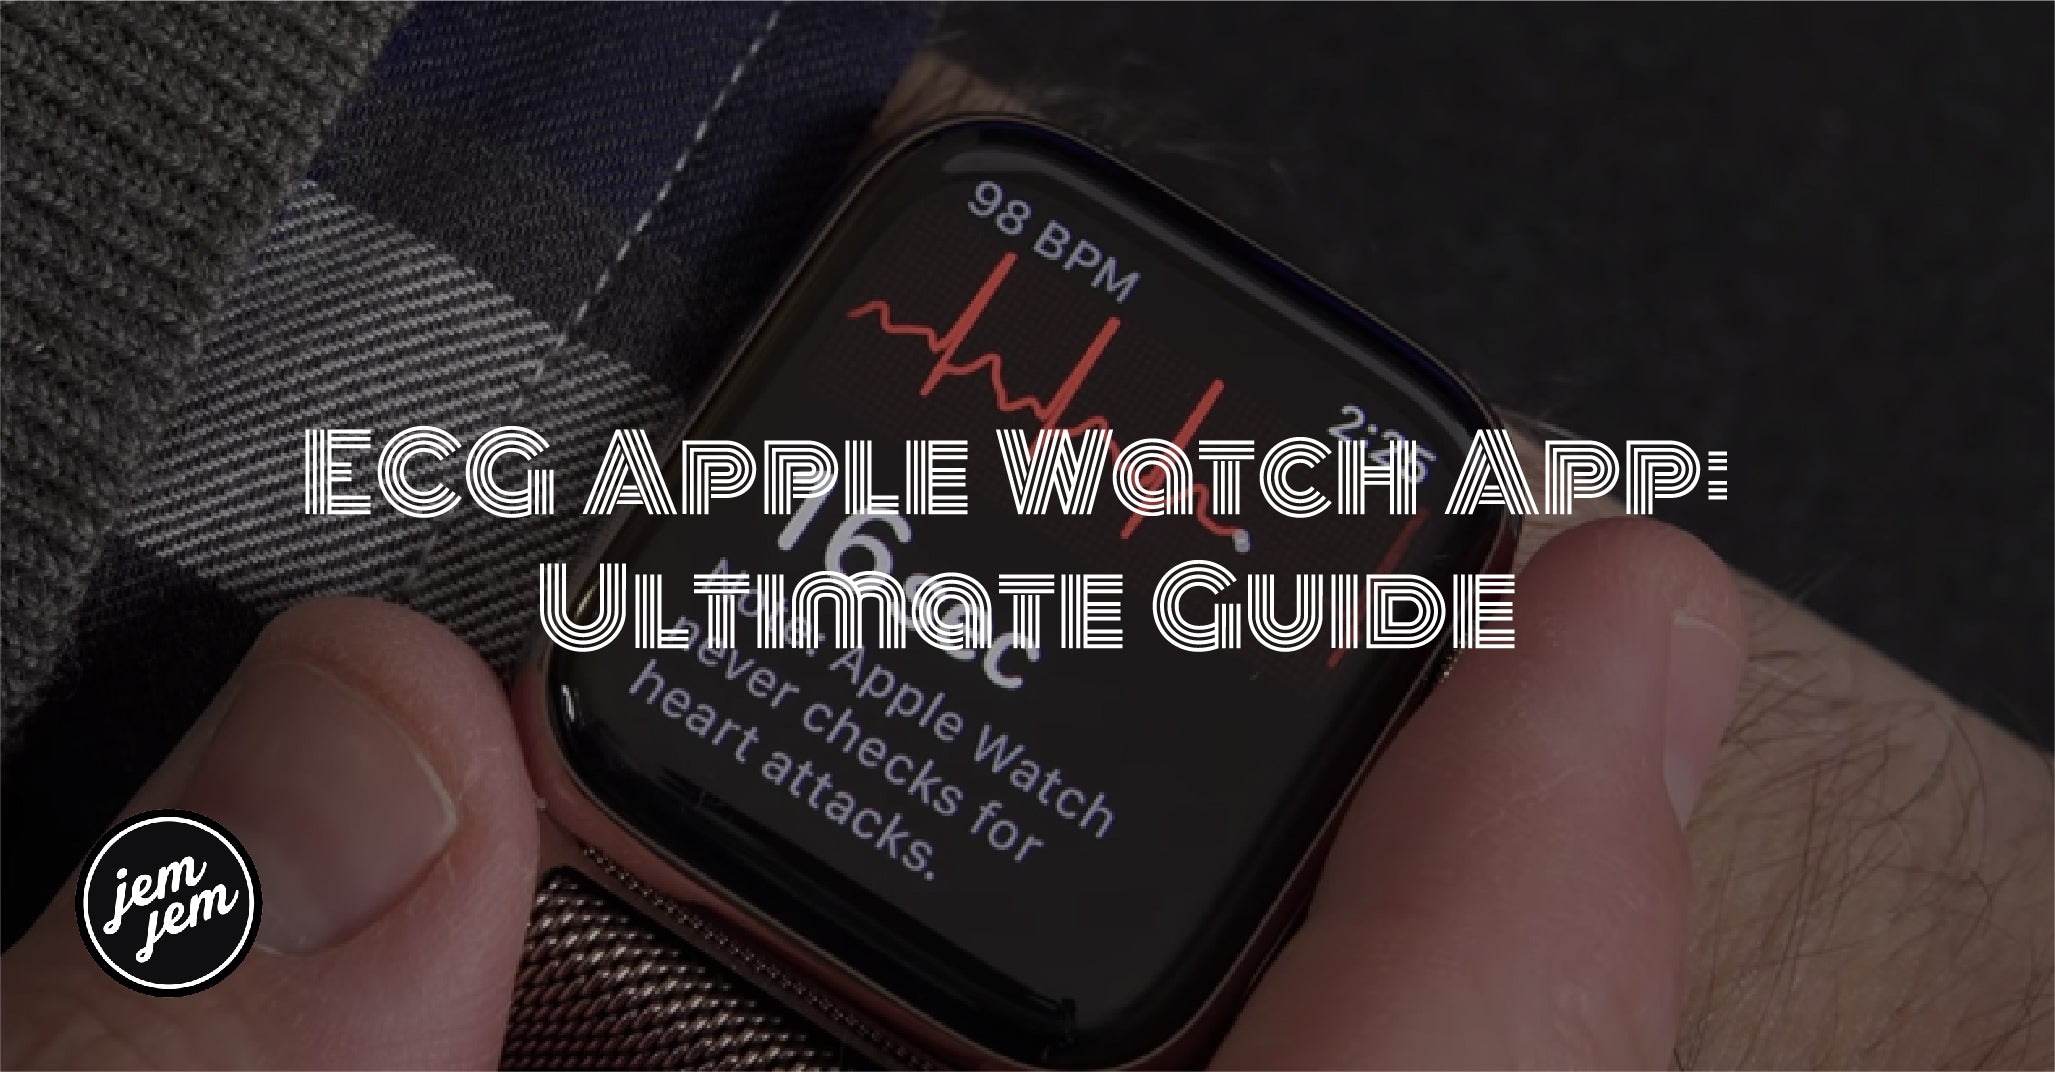 ECG Apple Watch App: The Ultimate Guide